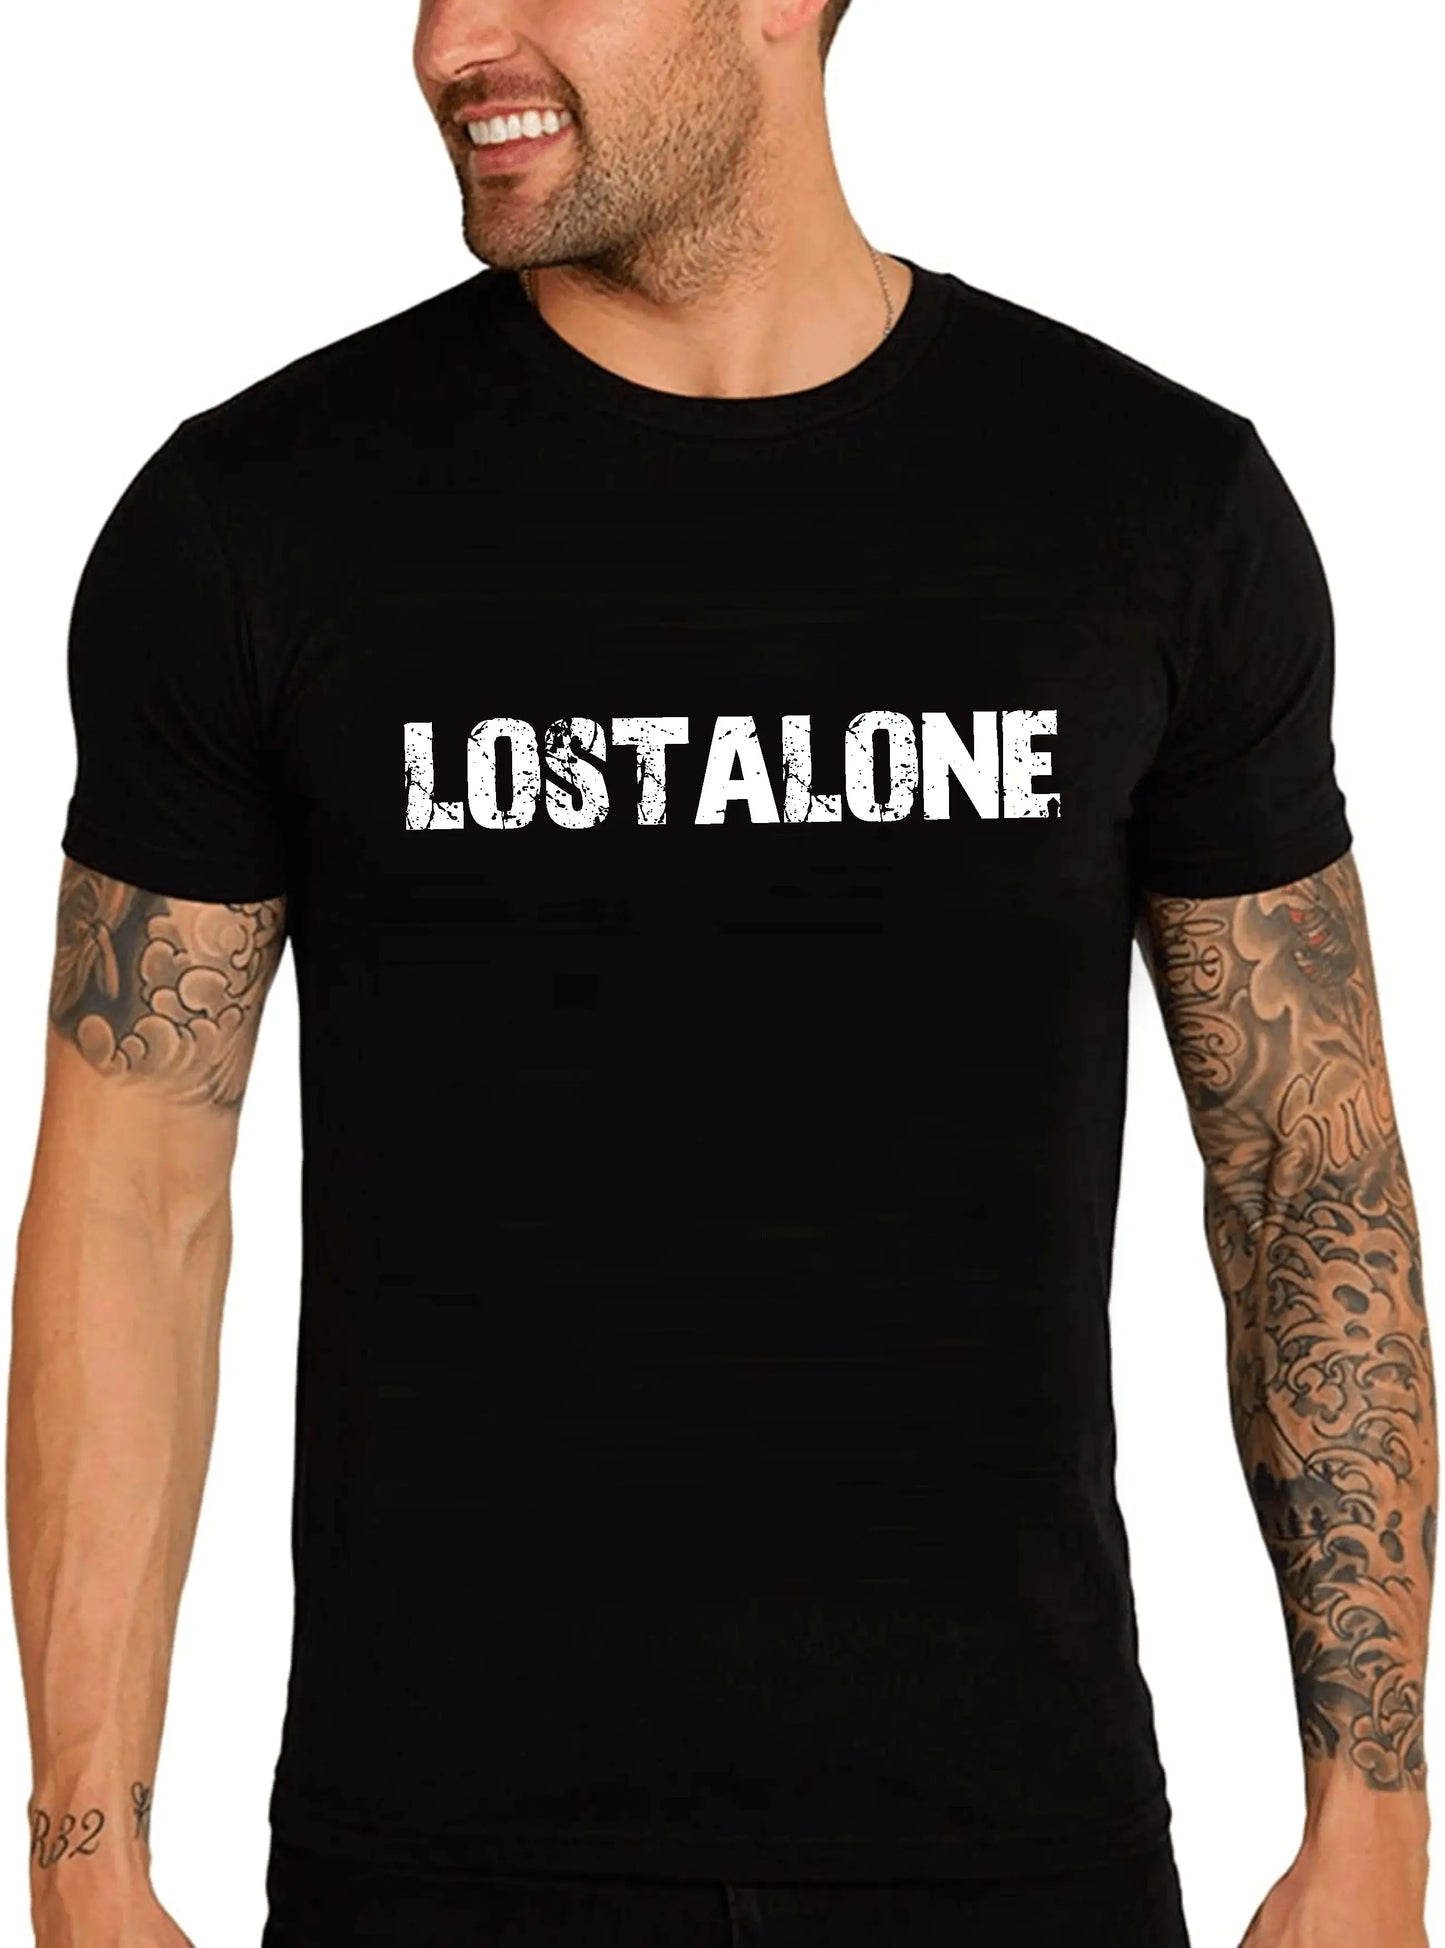 Men's Graphic T-Shirt Lostalone Eco-Friendly Limited Edition Short Sleeve Tee-Shirt Vintage Birthday Gift Novelty